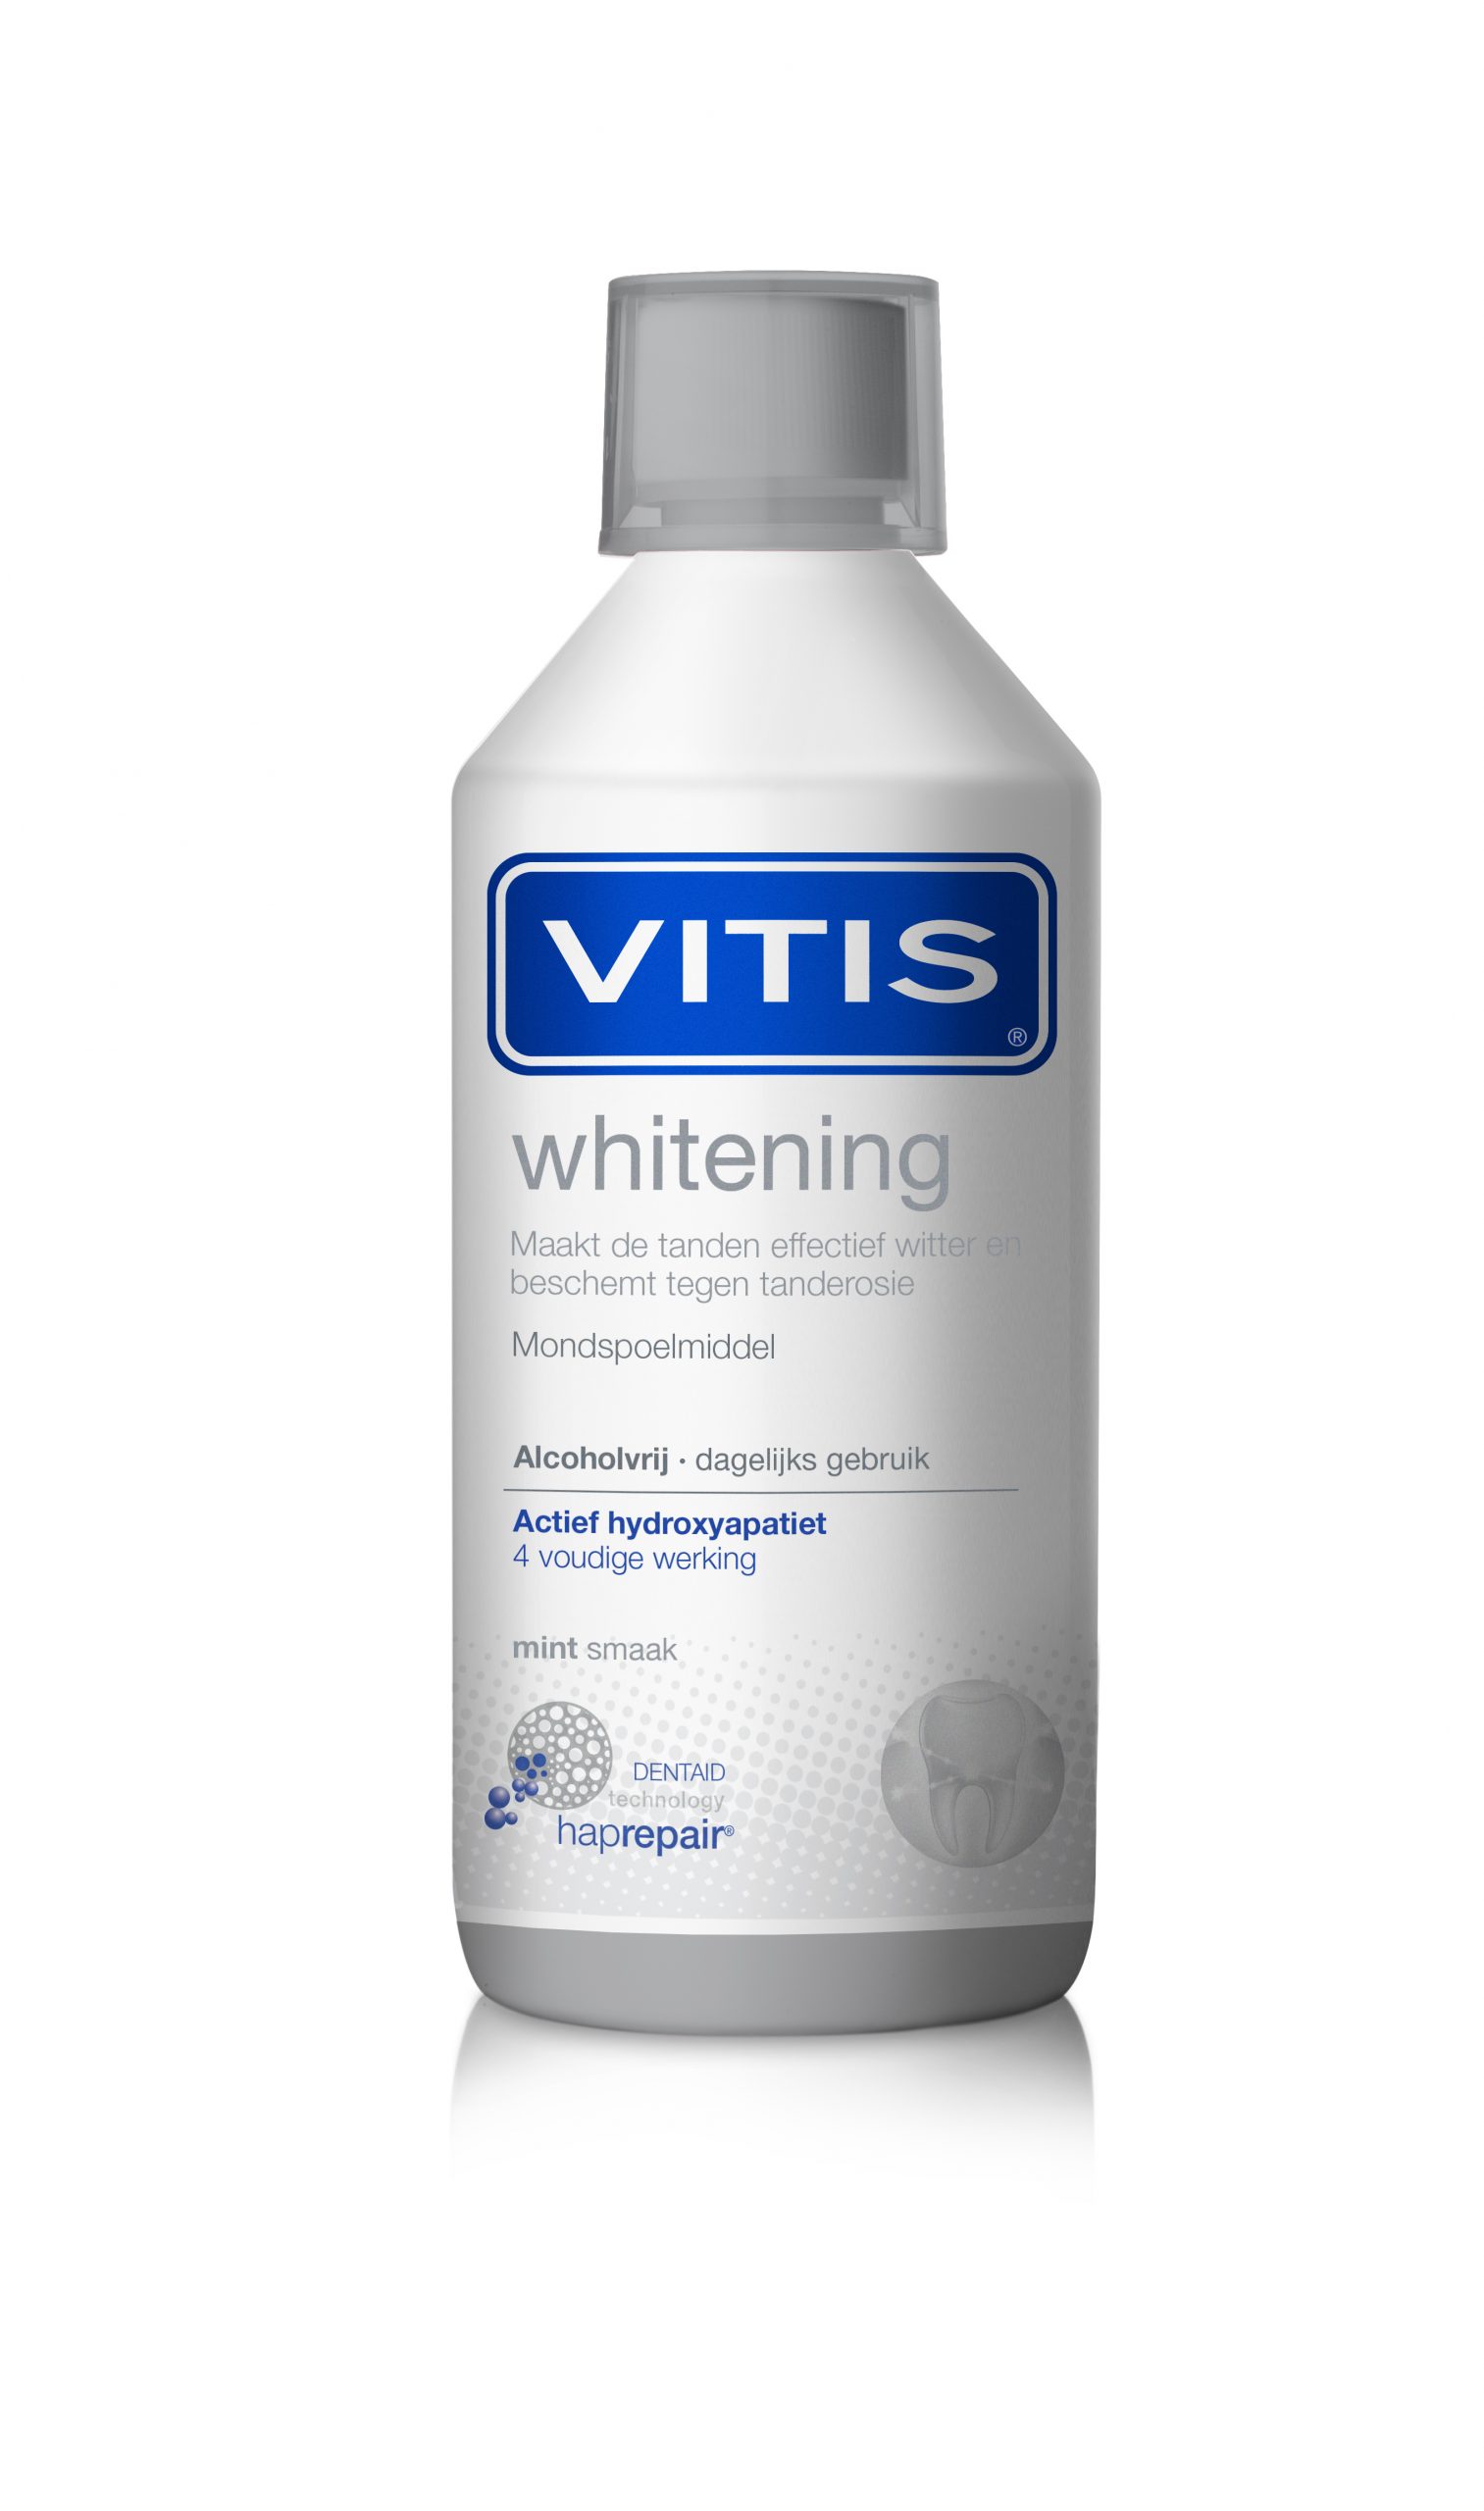 Soeverein Rudyard Kipling analoog Whitening mondspoelmiddel 500 ml Vitis ⋆ Bik & Bik NL